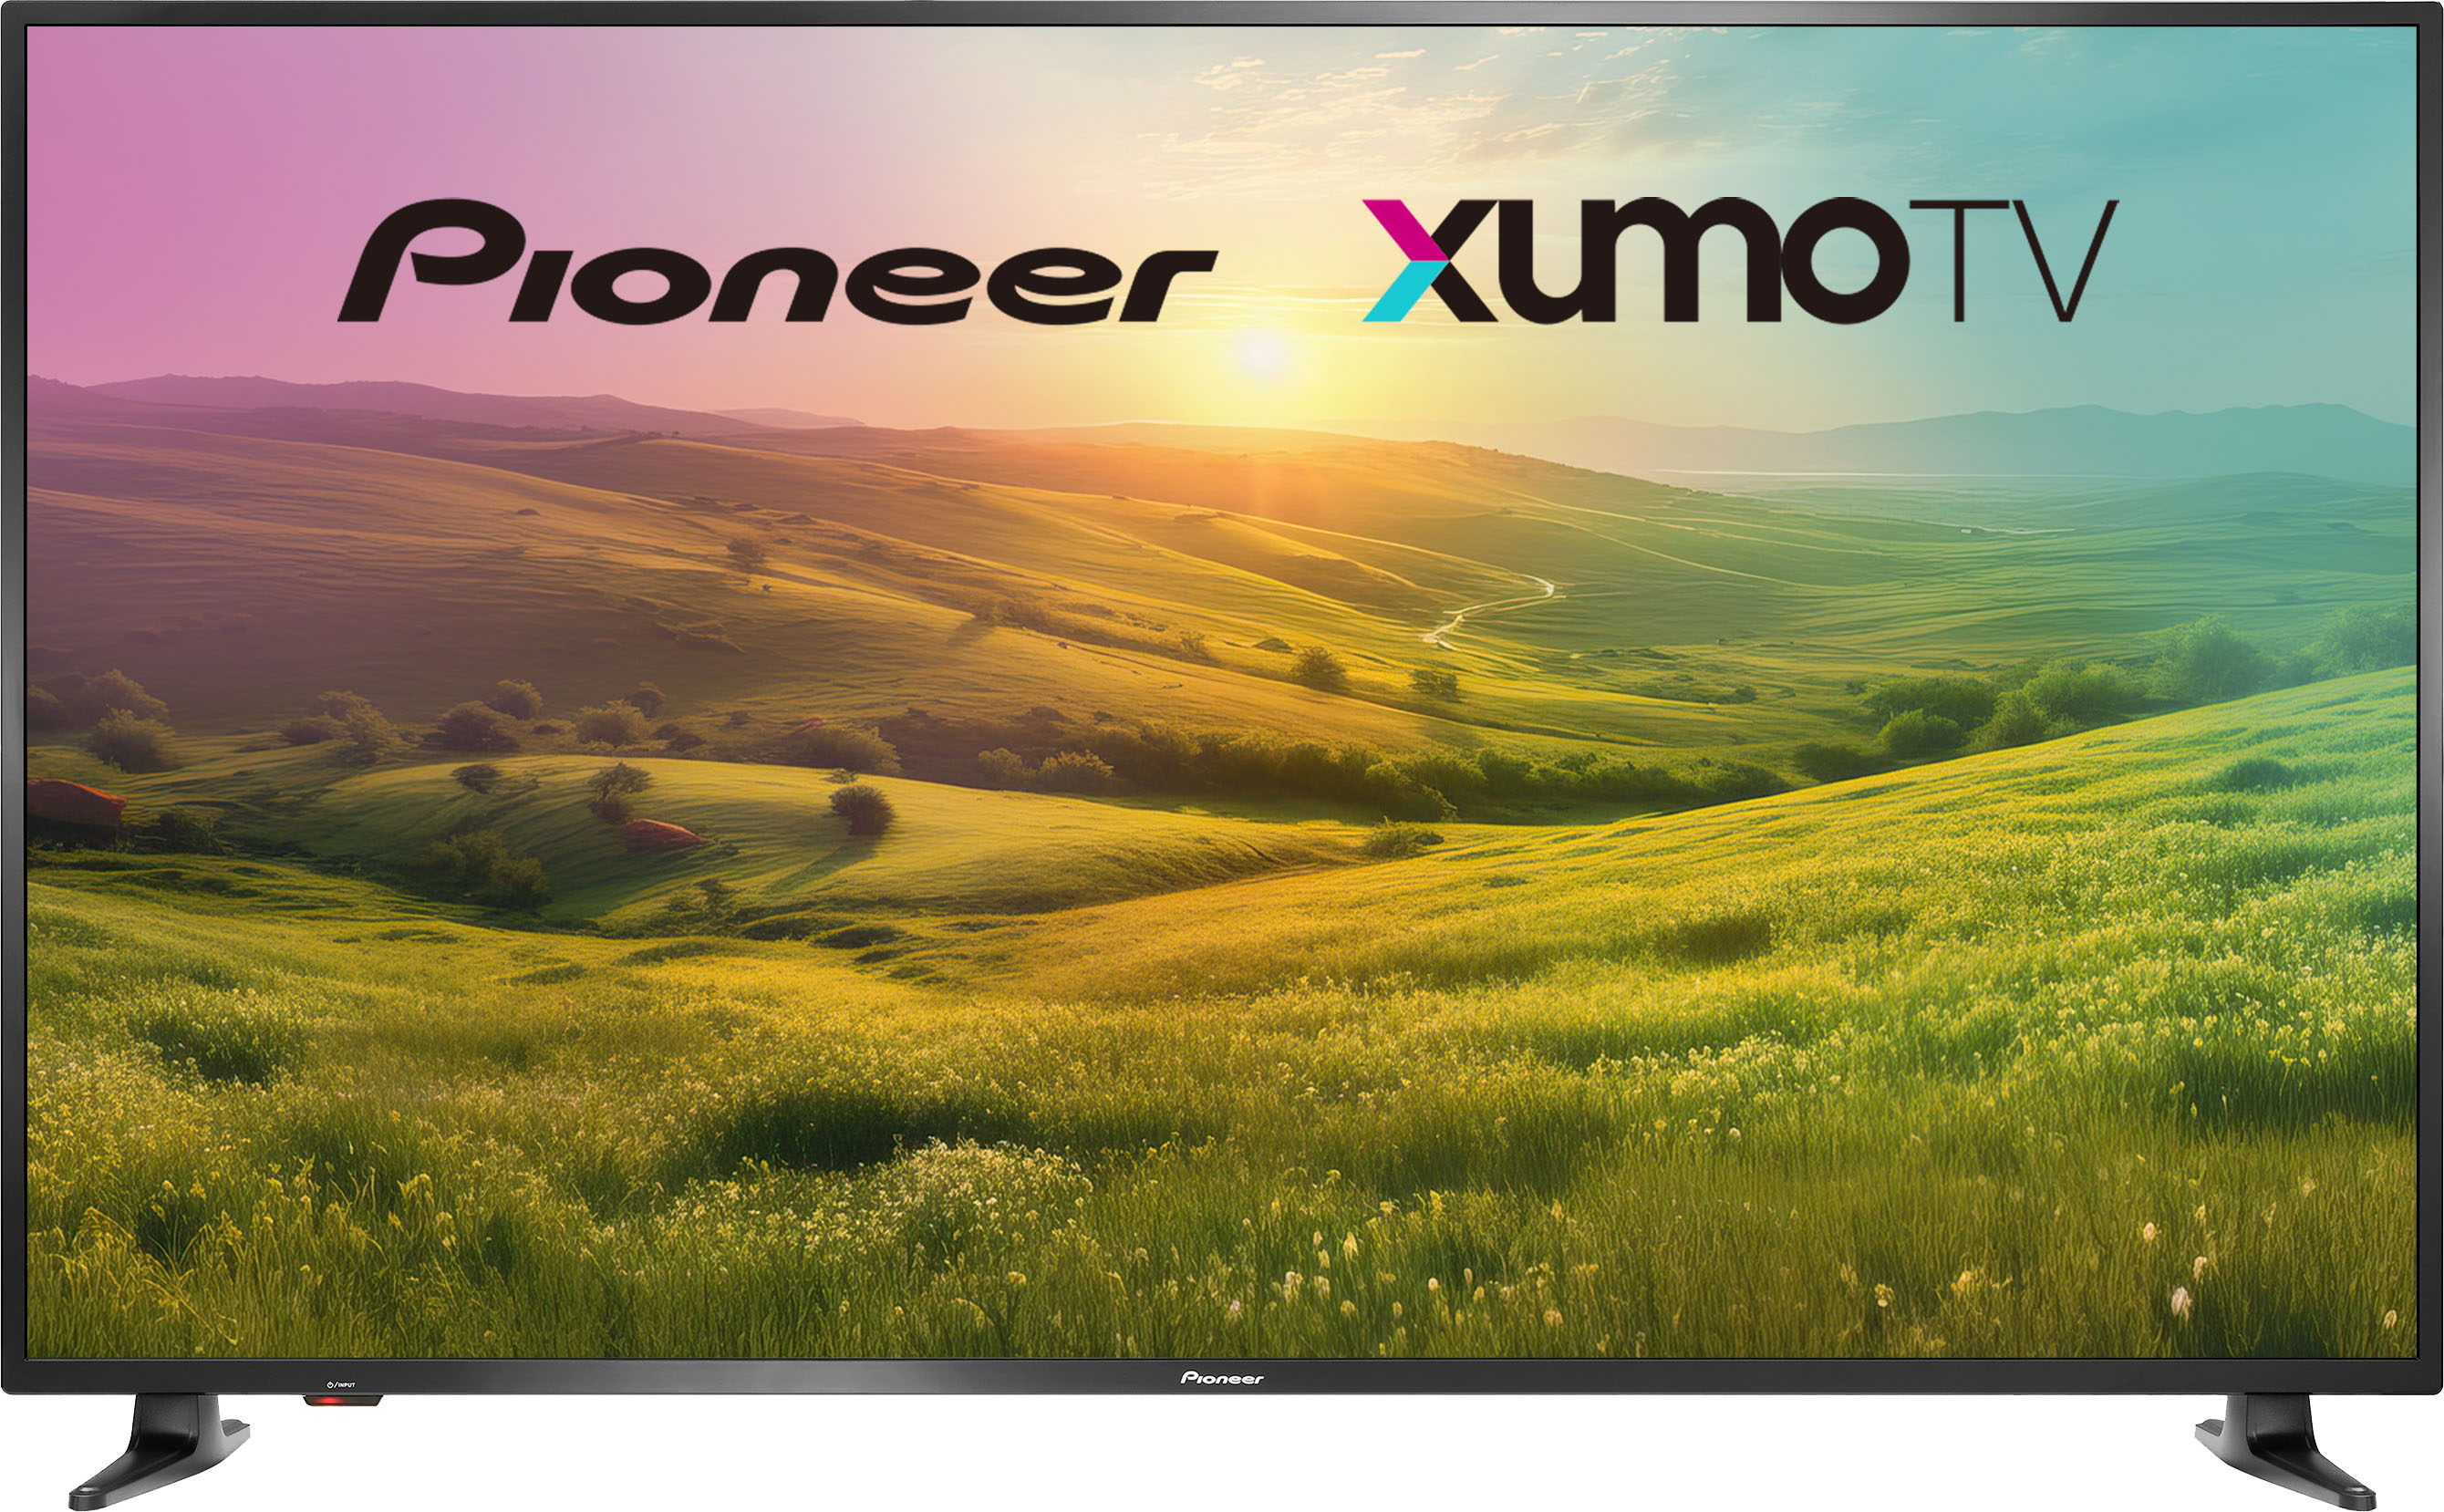 65" Pioneer 4K UHD Smart Xumo LED TV $300